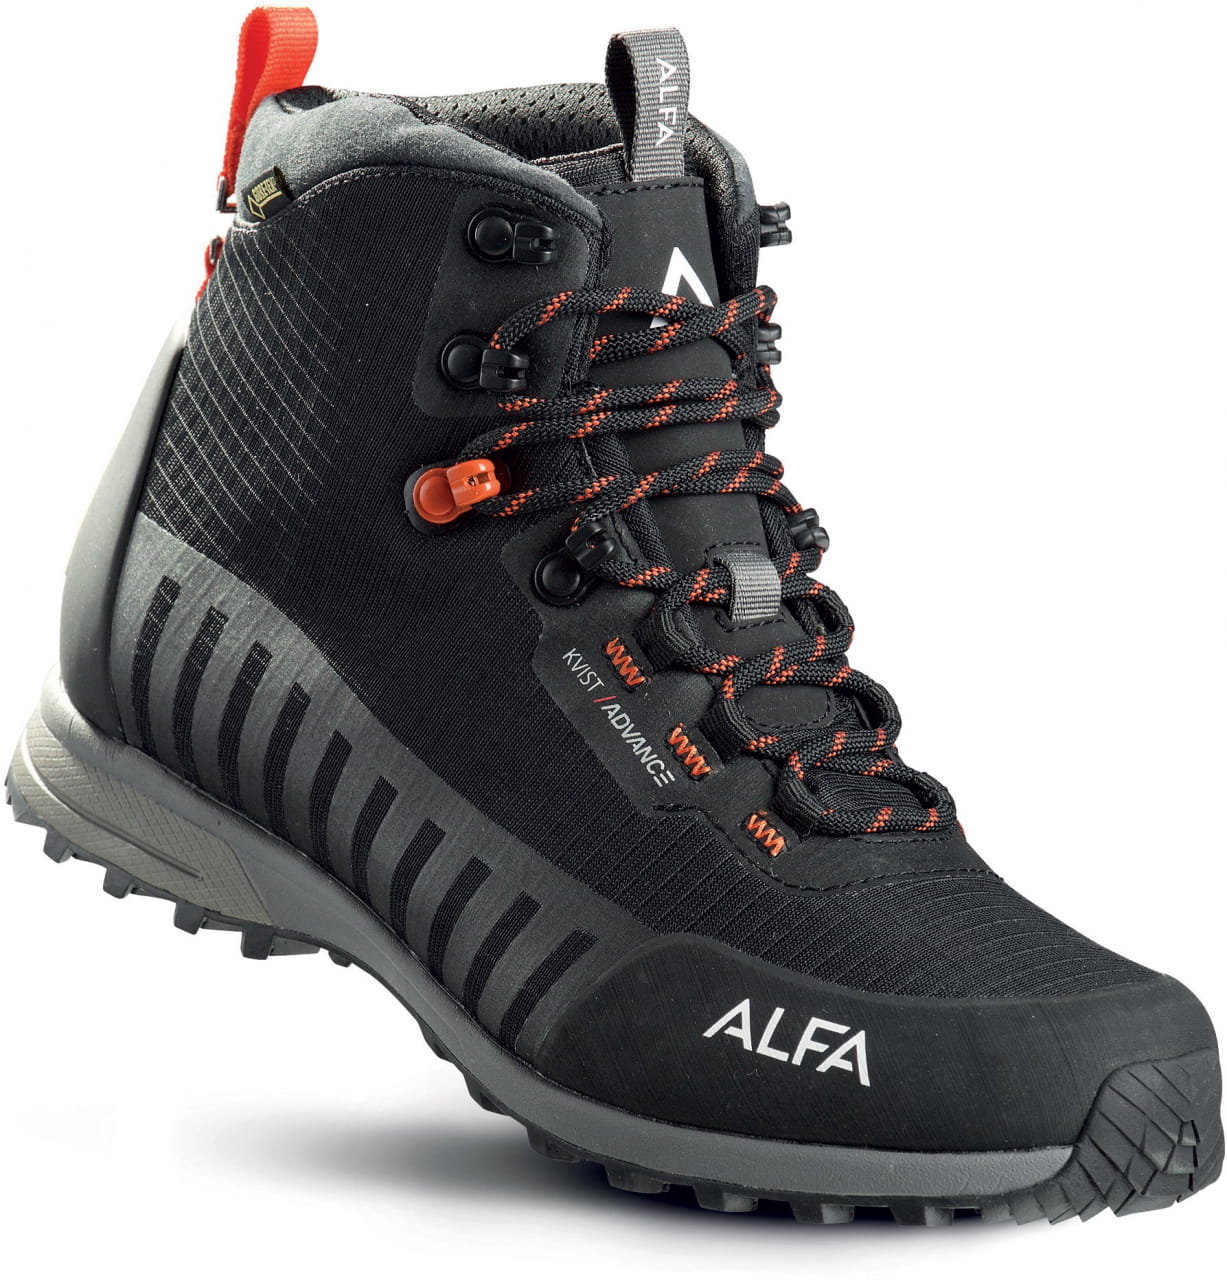 Outdoor-Schuhe für Männer Alfa Kvist Advance Gtx M